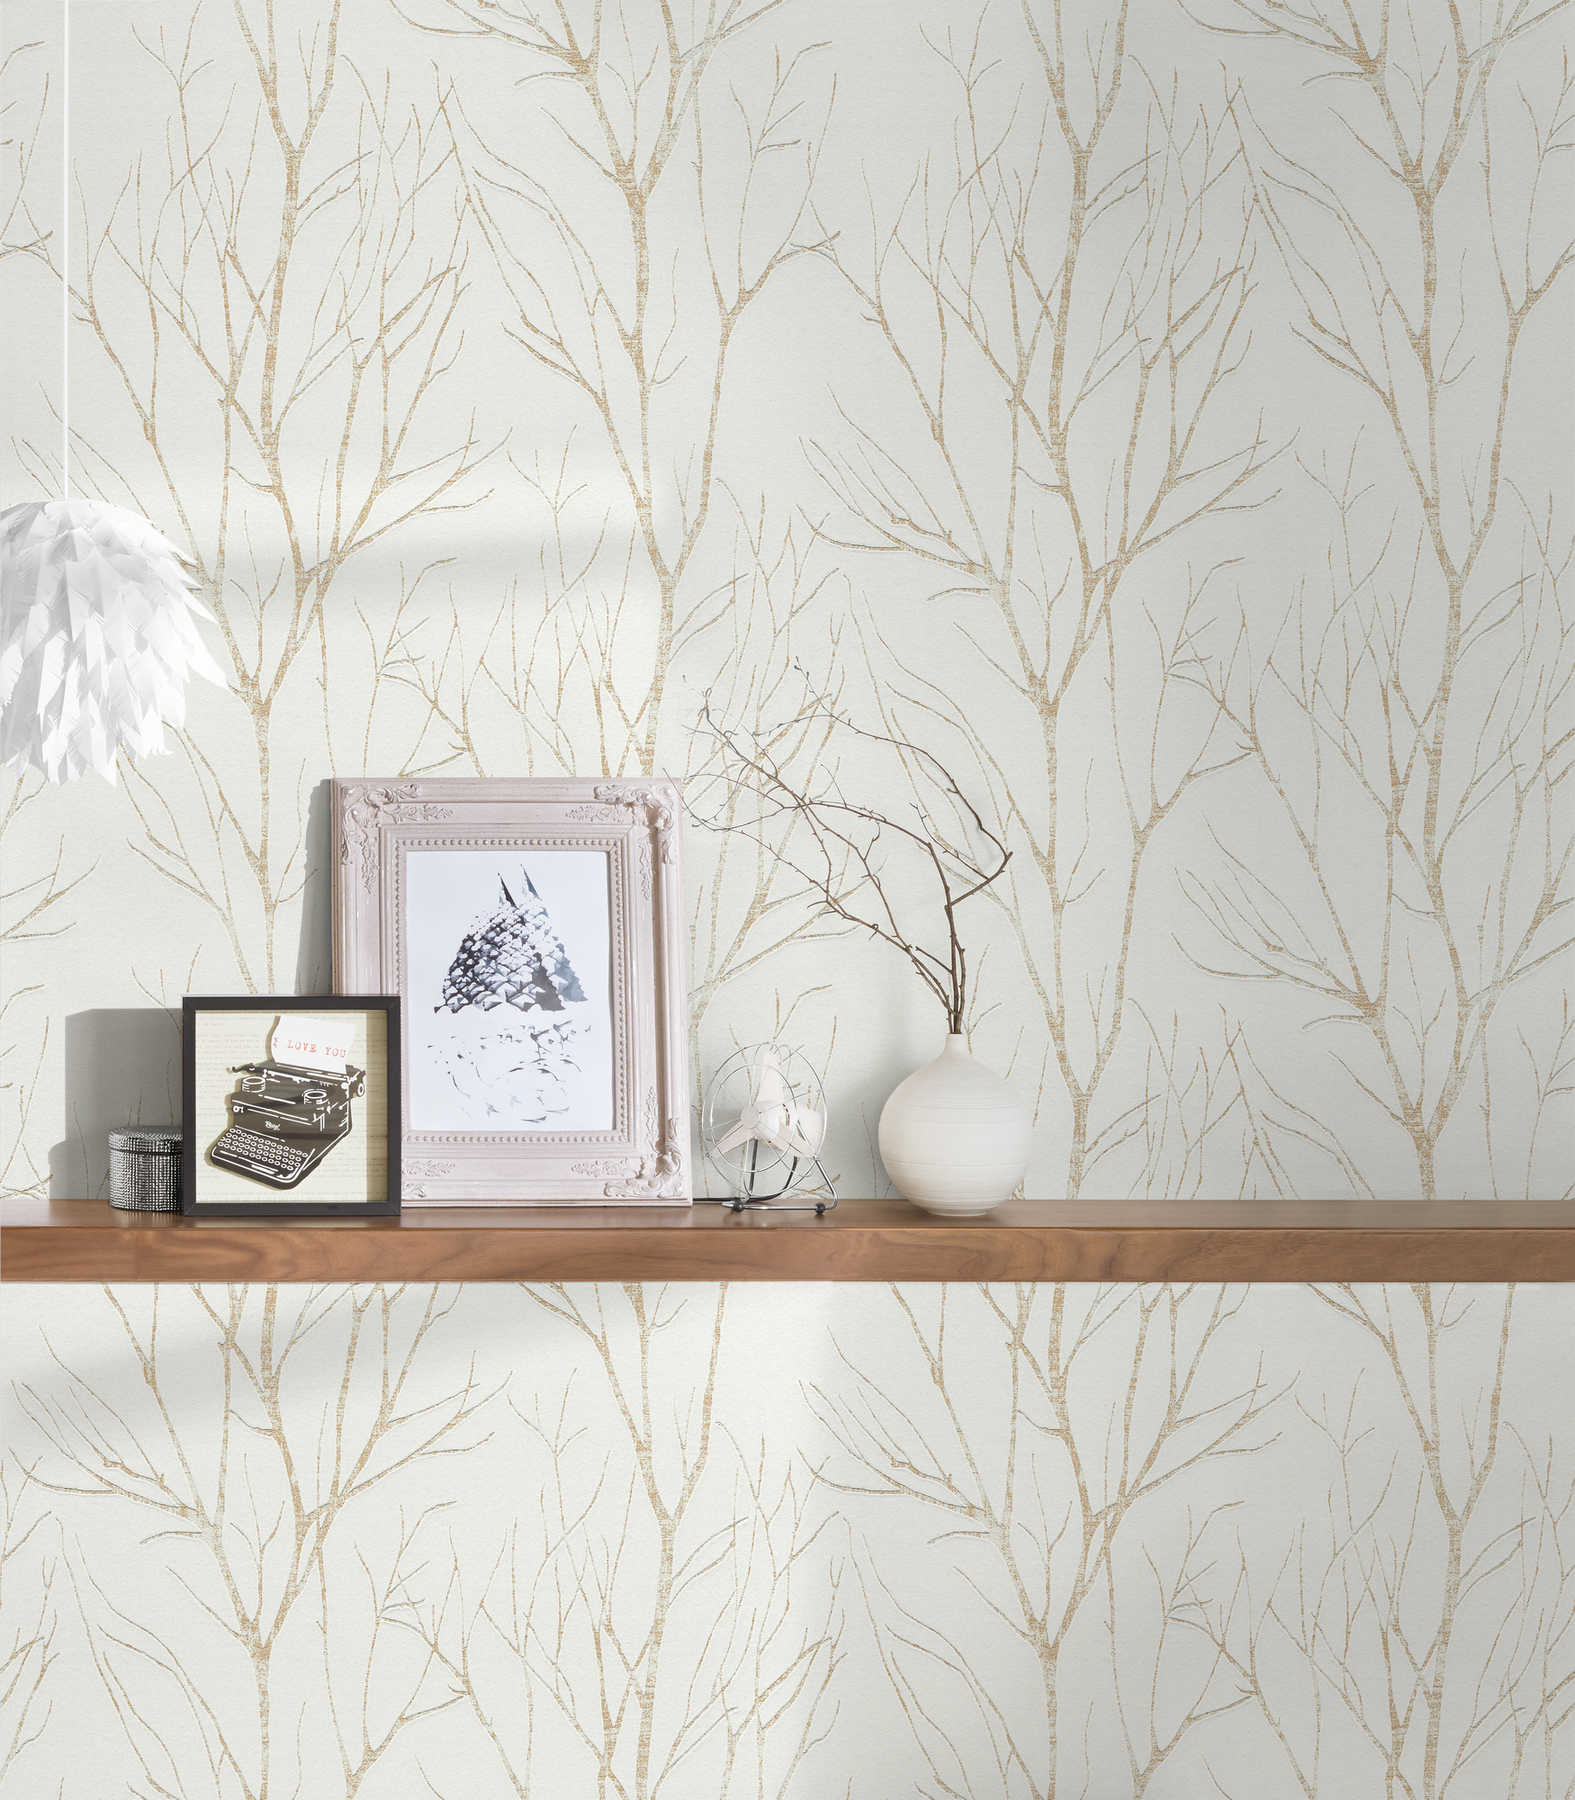             Non-woven wallpaper tree motif & metallic effect - beige, cream, metallic
        